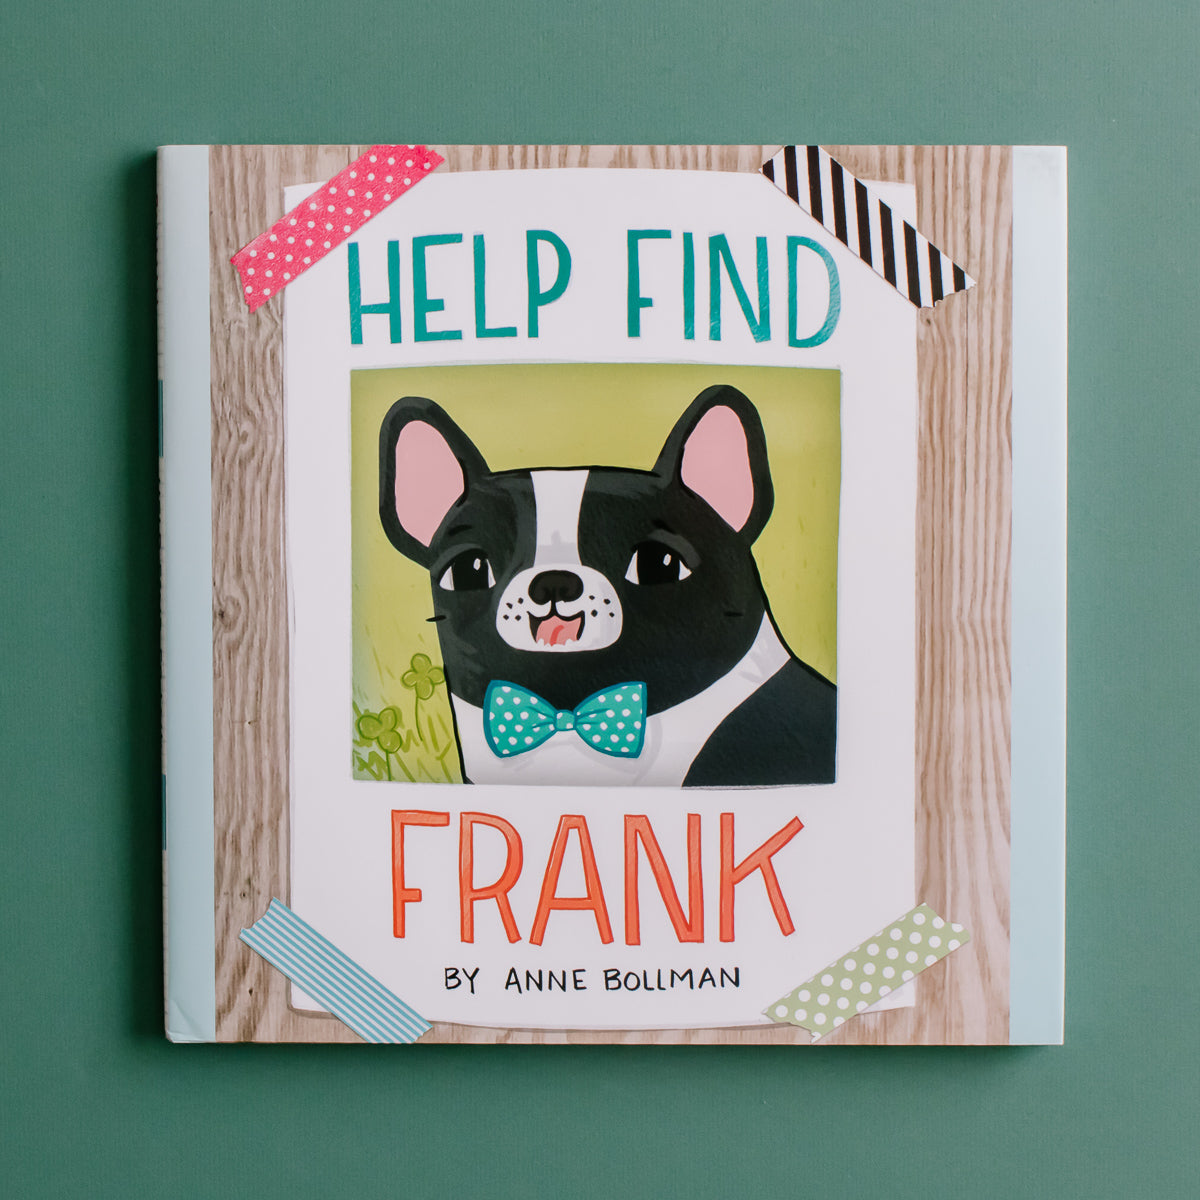 HELP FIND FRANK